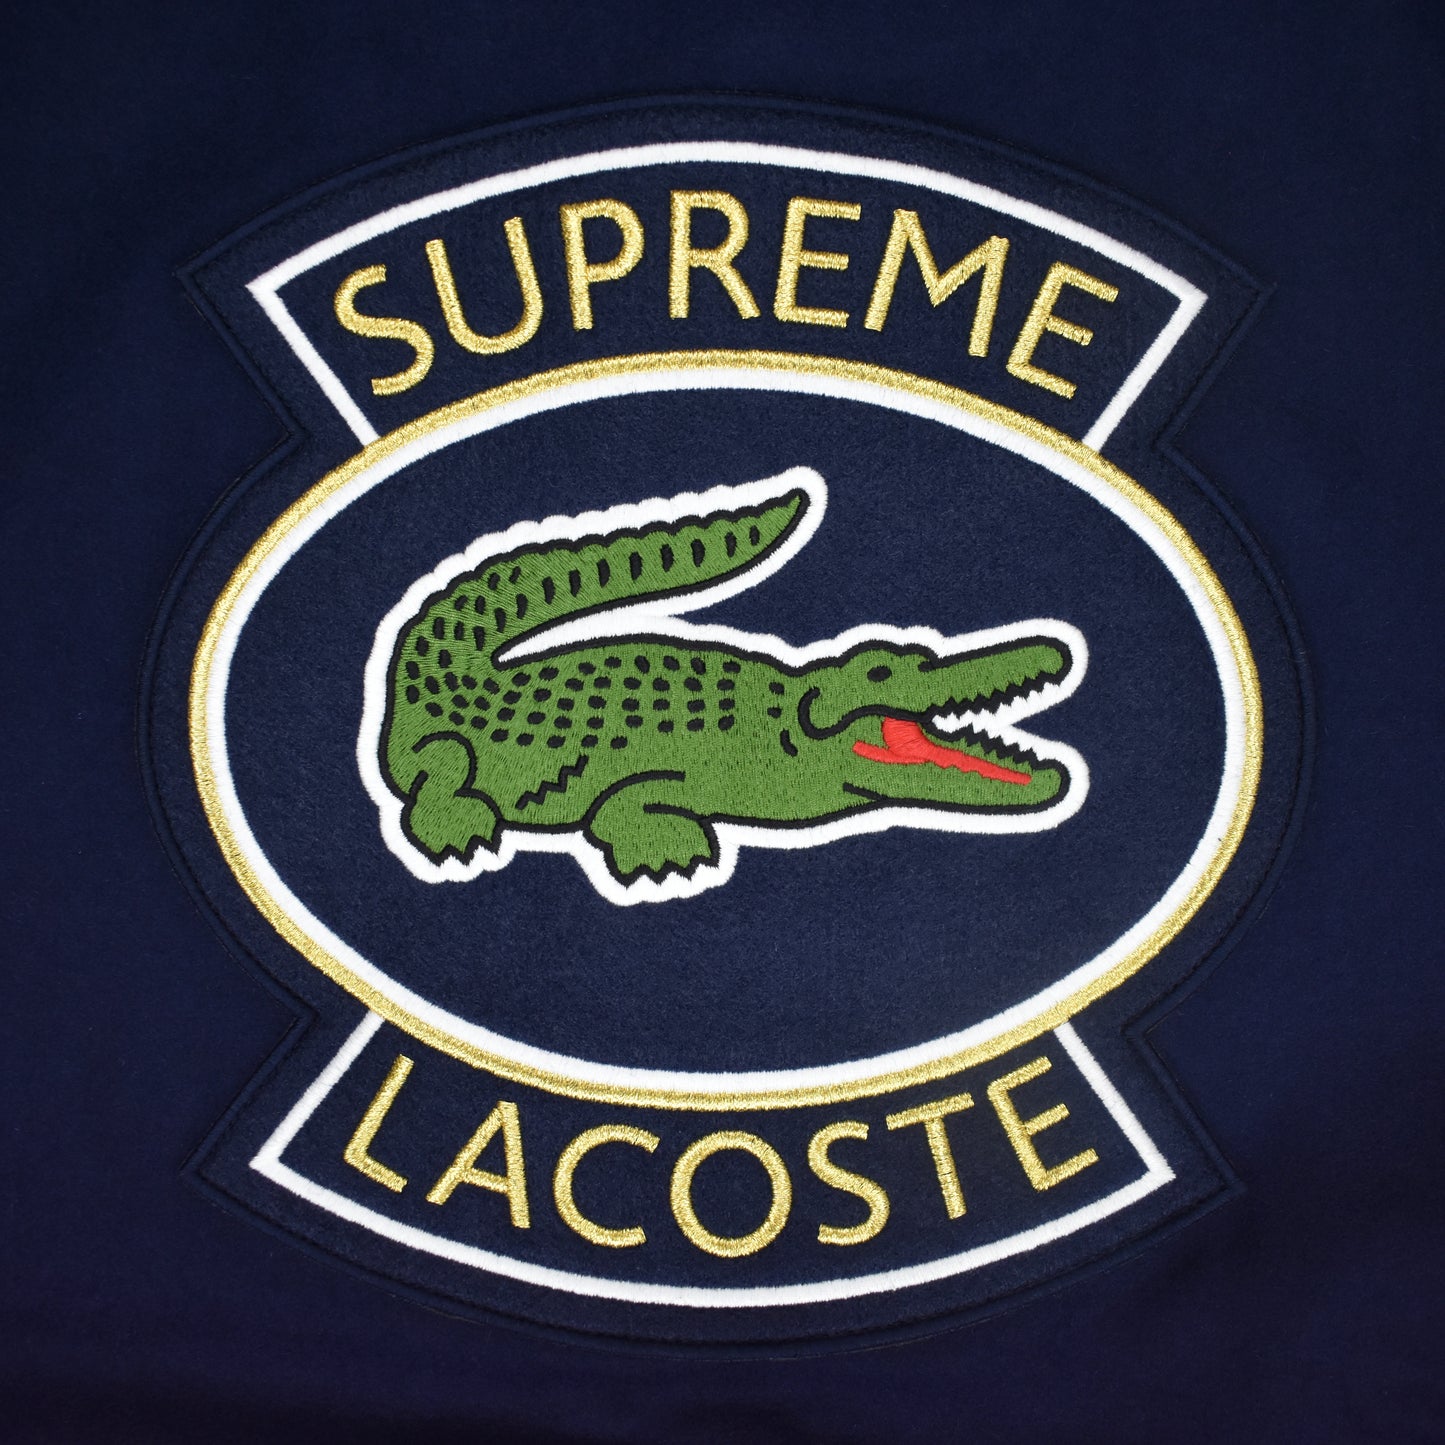 Supreme x Lacoste - Navy/Green Wool Varsity Jacket (SS18)